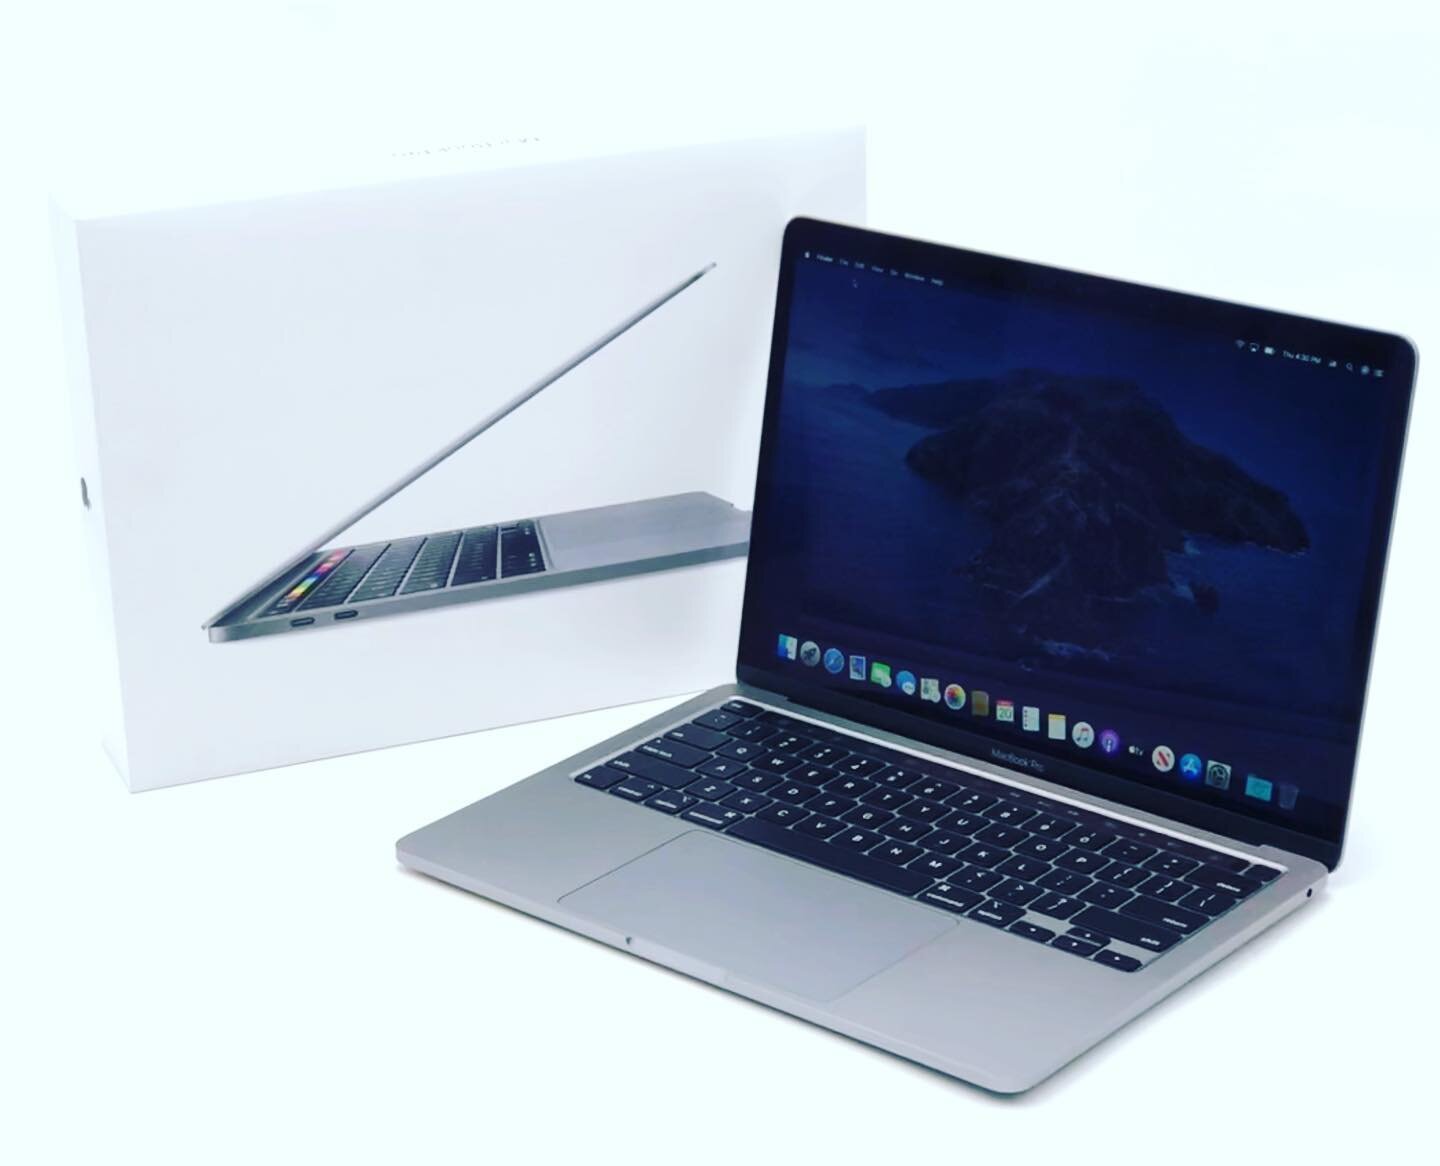 The New 2020 MacBook Pro. In stock!

#apple #macbookpro #compco #downtownstamford